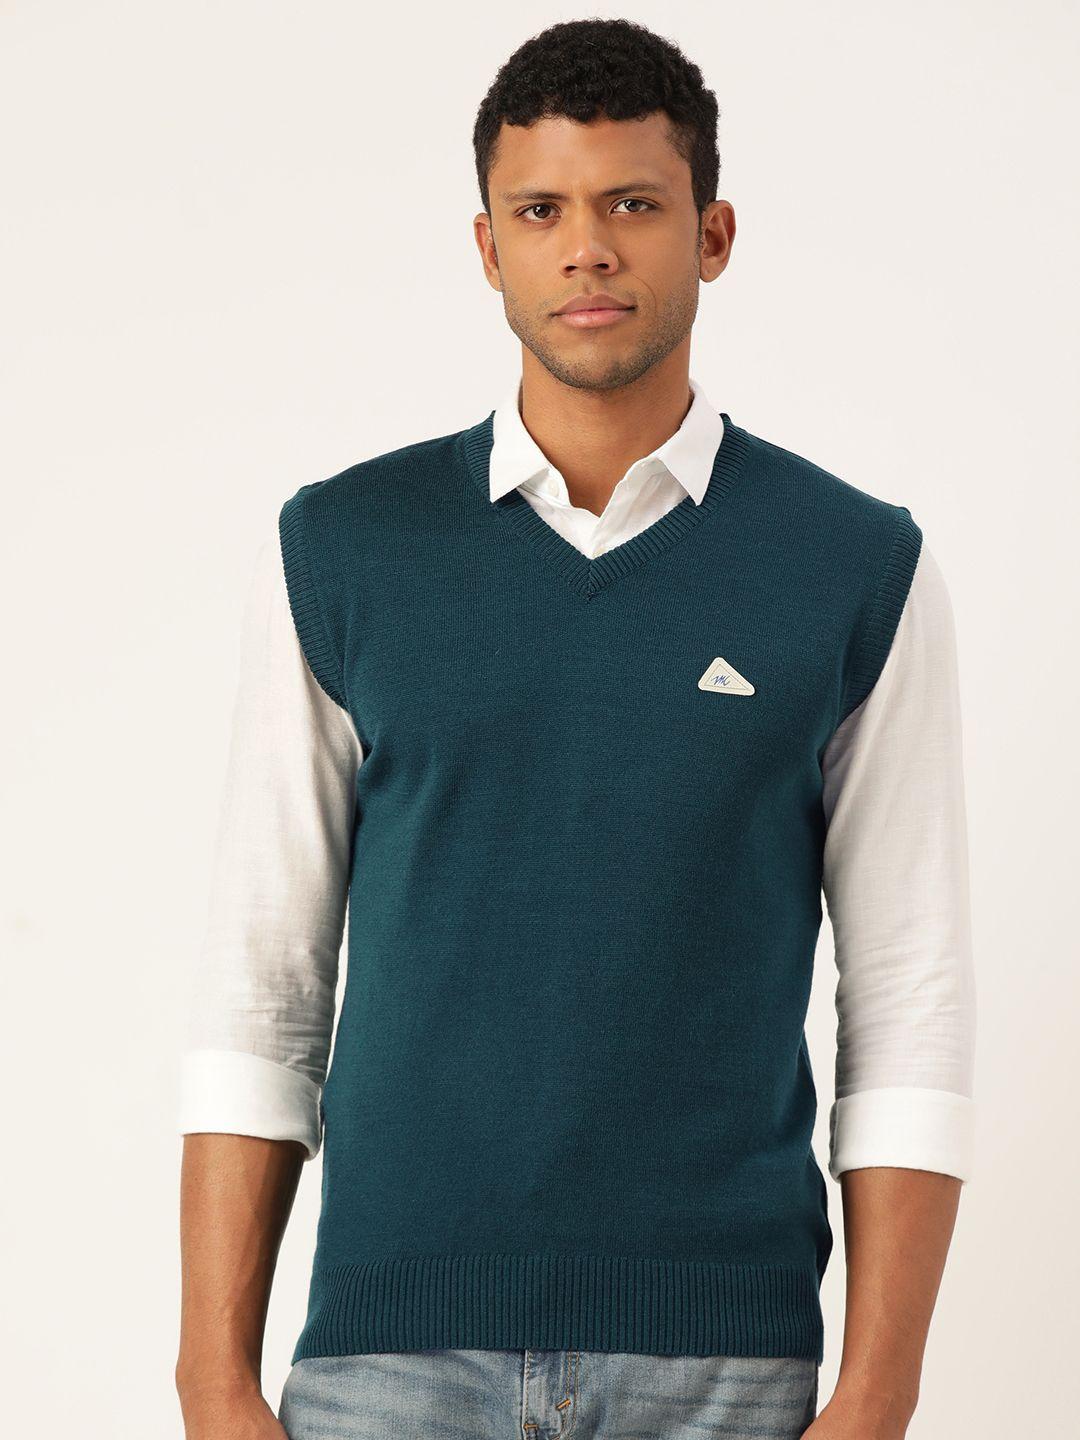 monte-carlo-woollen-sweater-vest